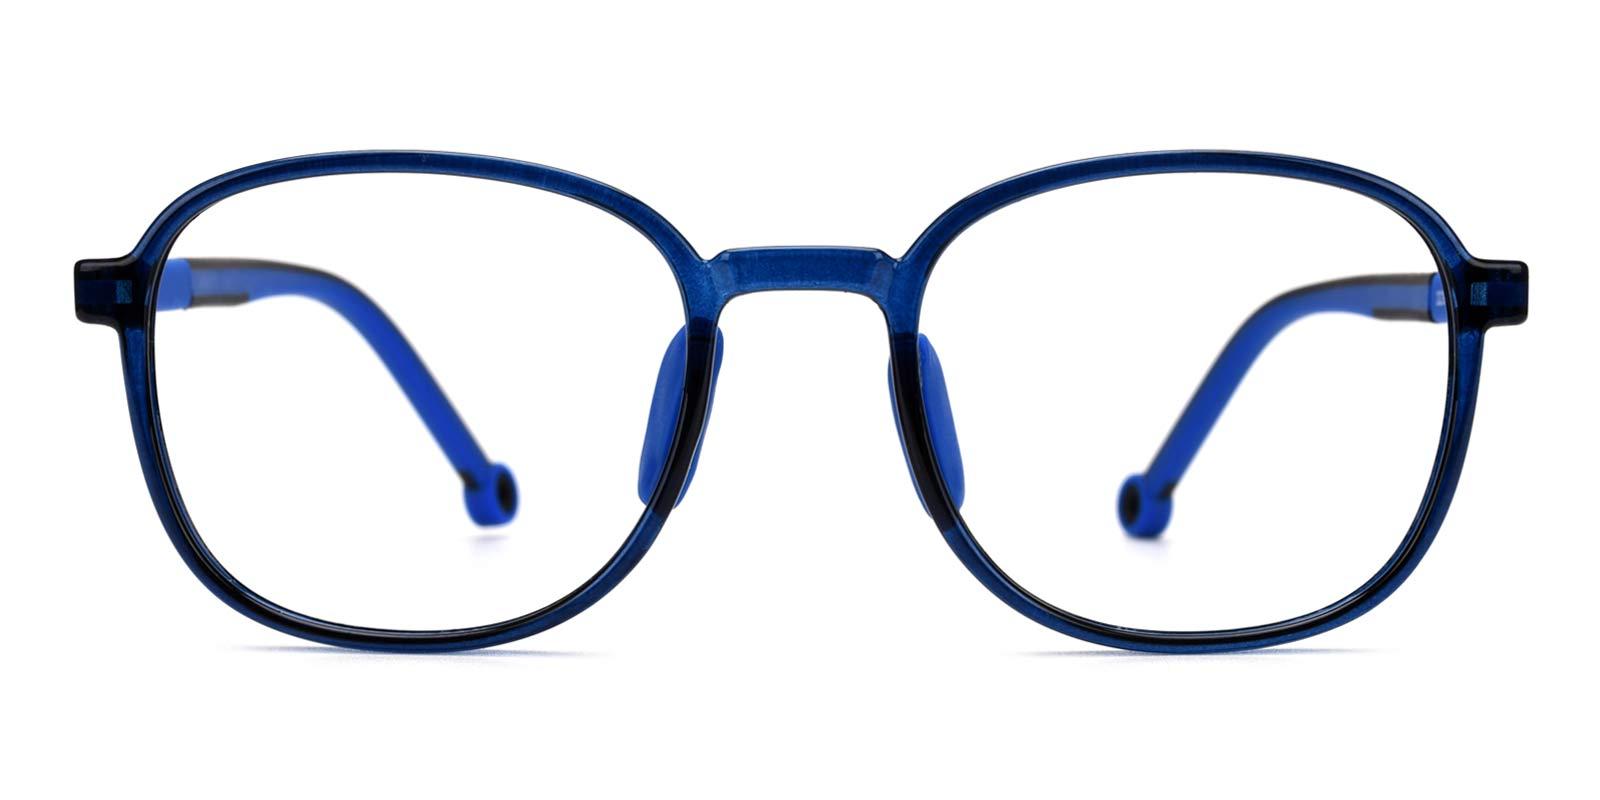 Warren-Translucent-Rectangle / Round-TR-Eyeglasses-detail